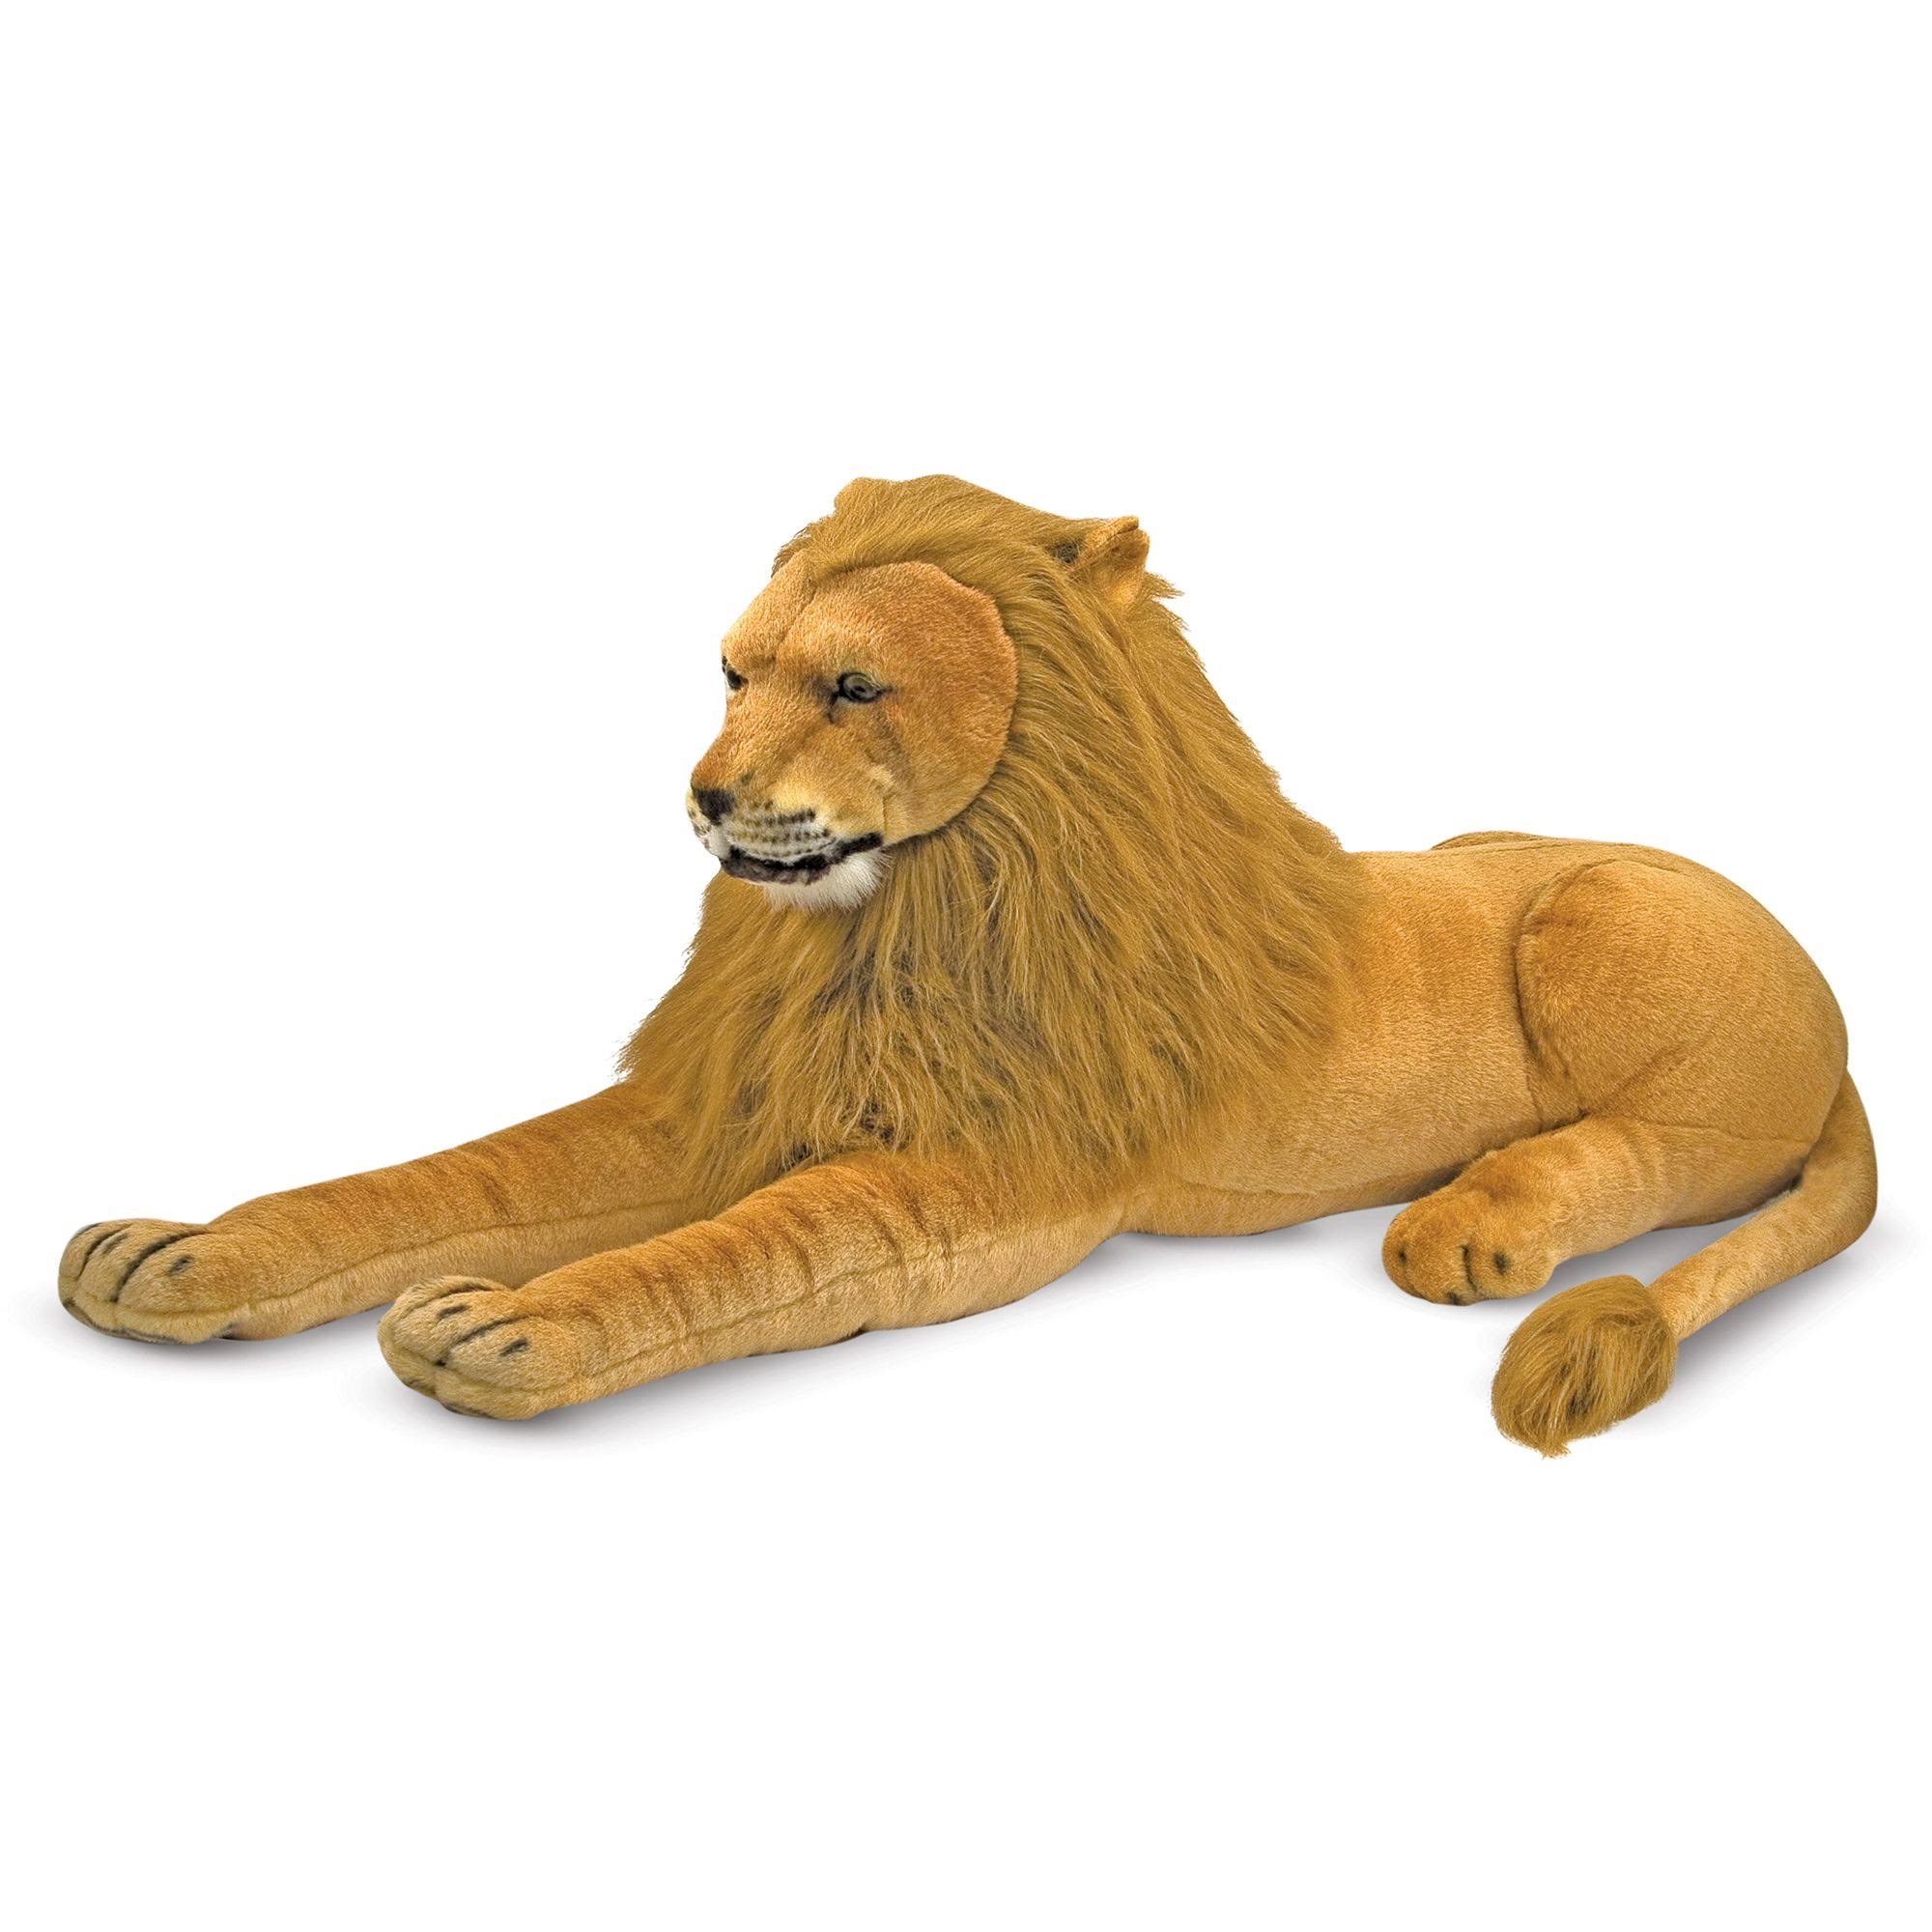 Melissa and Doug Huggable Plush Stuffed Lion Soft Toy - Large